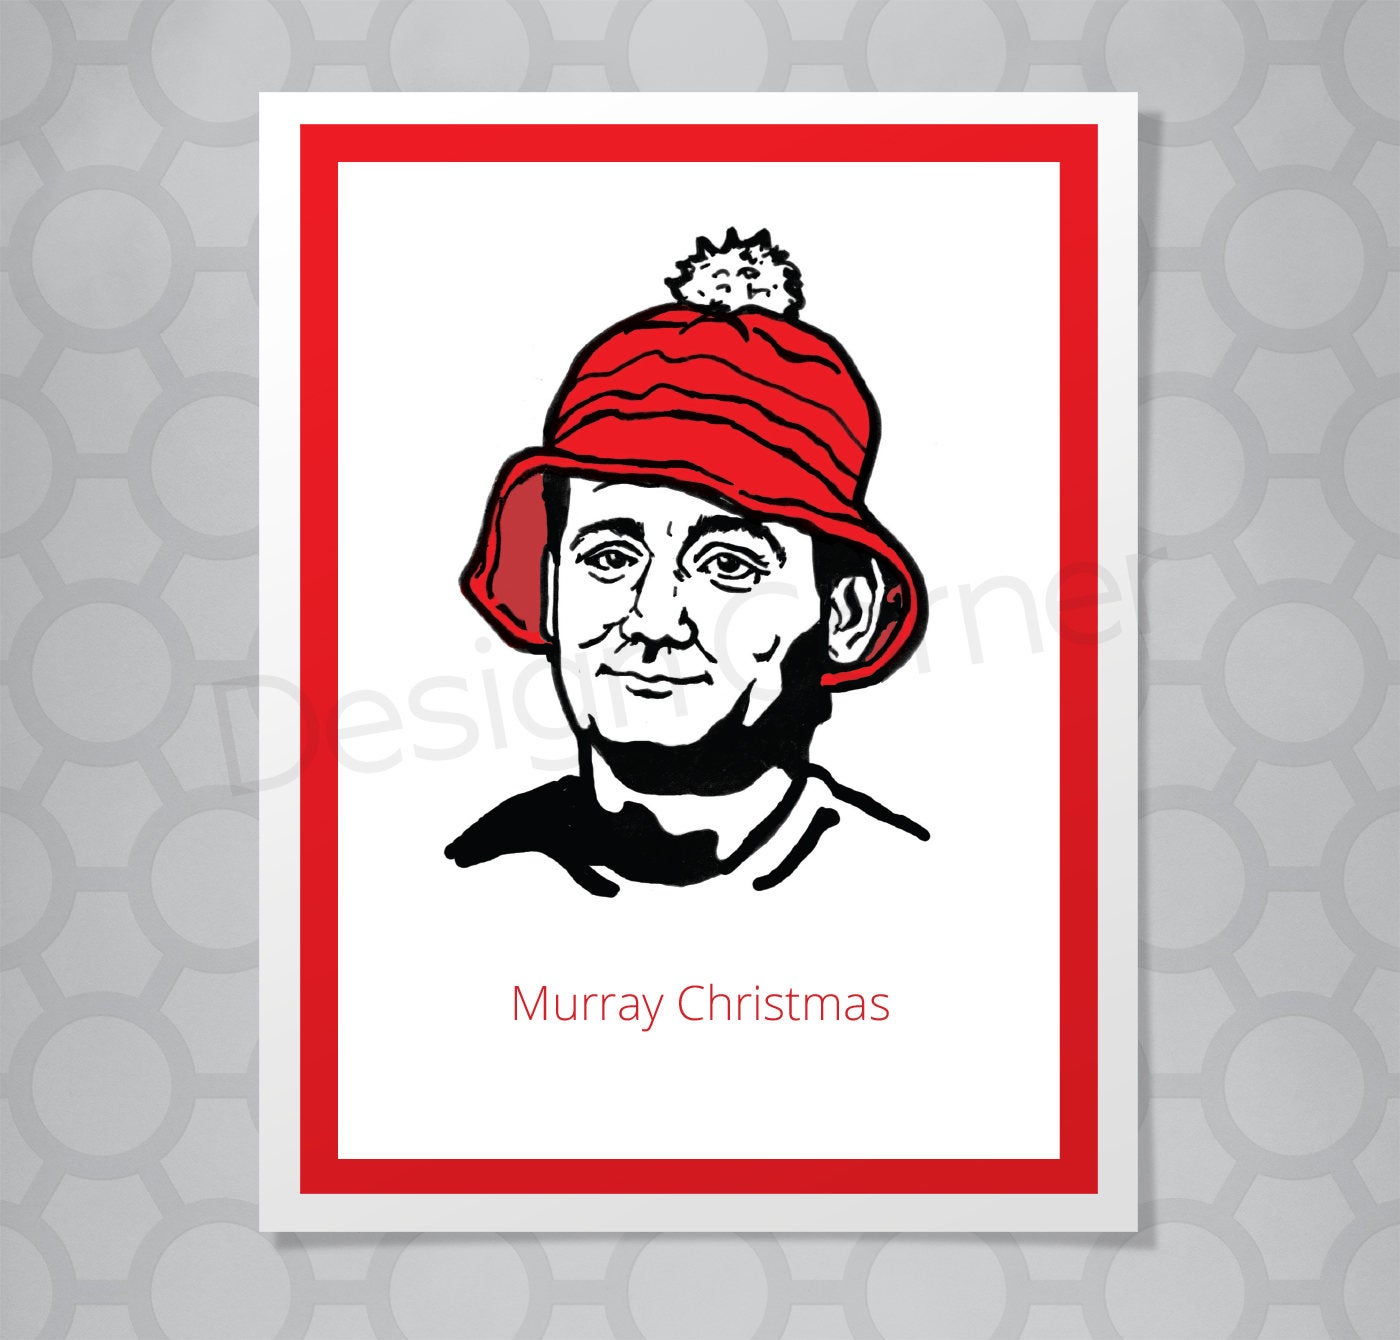 Bill Murray Illustrated Christmas Card